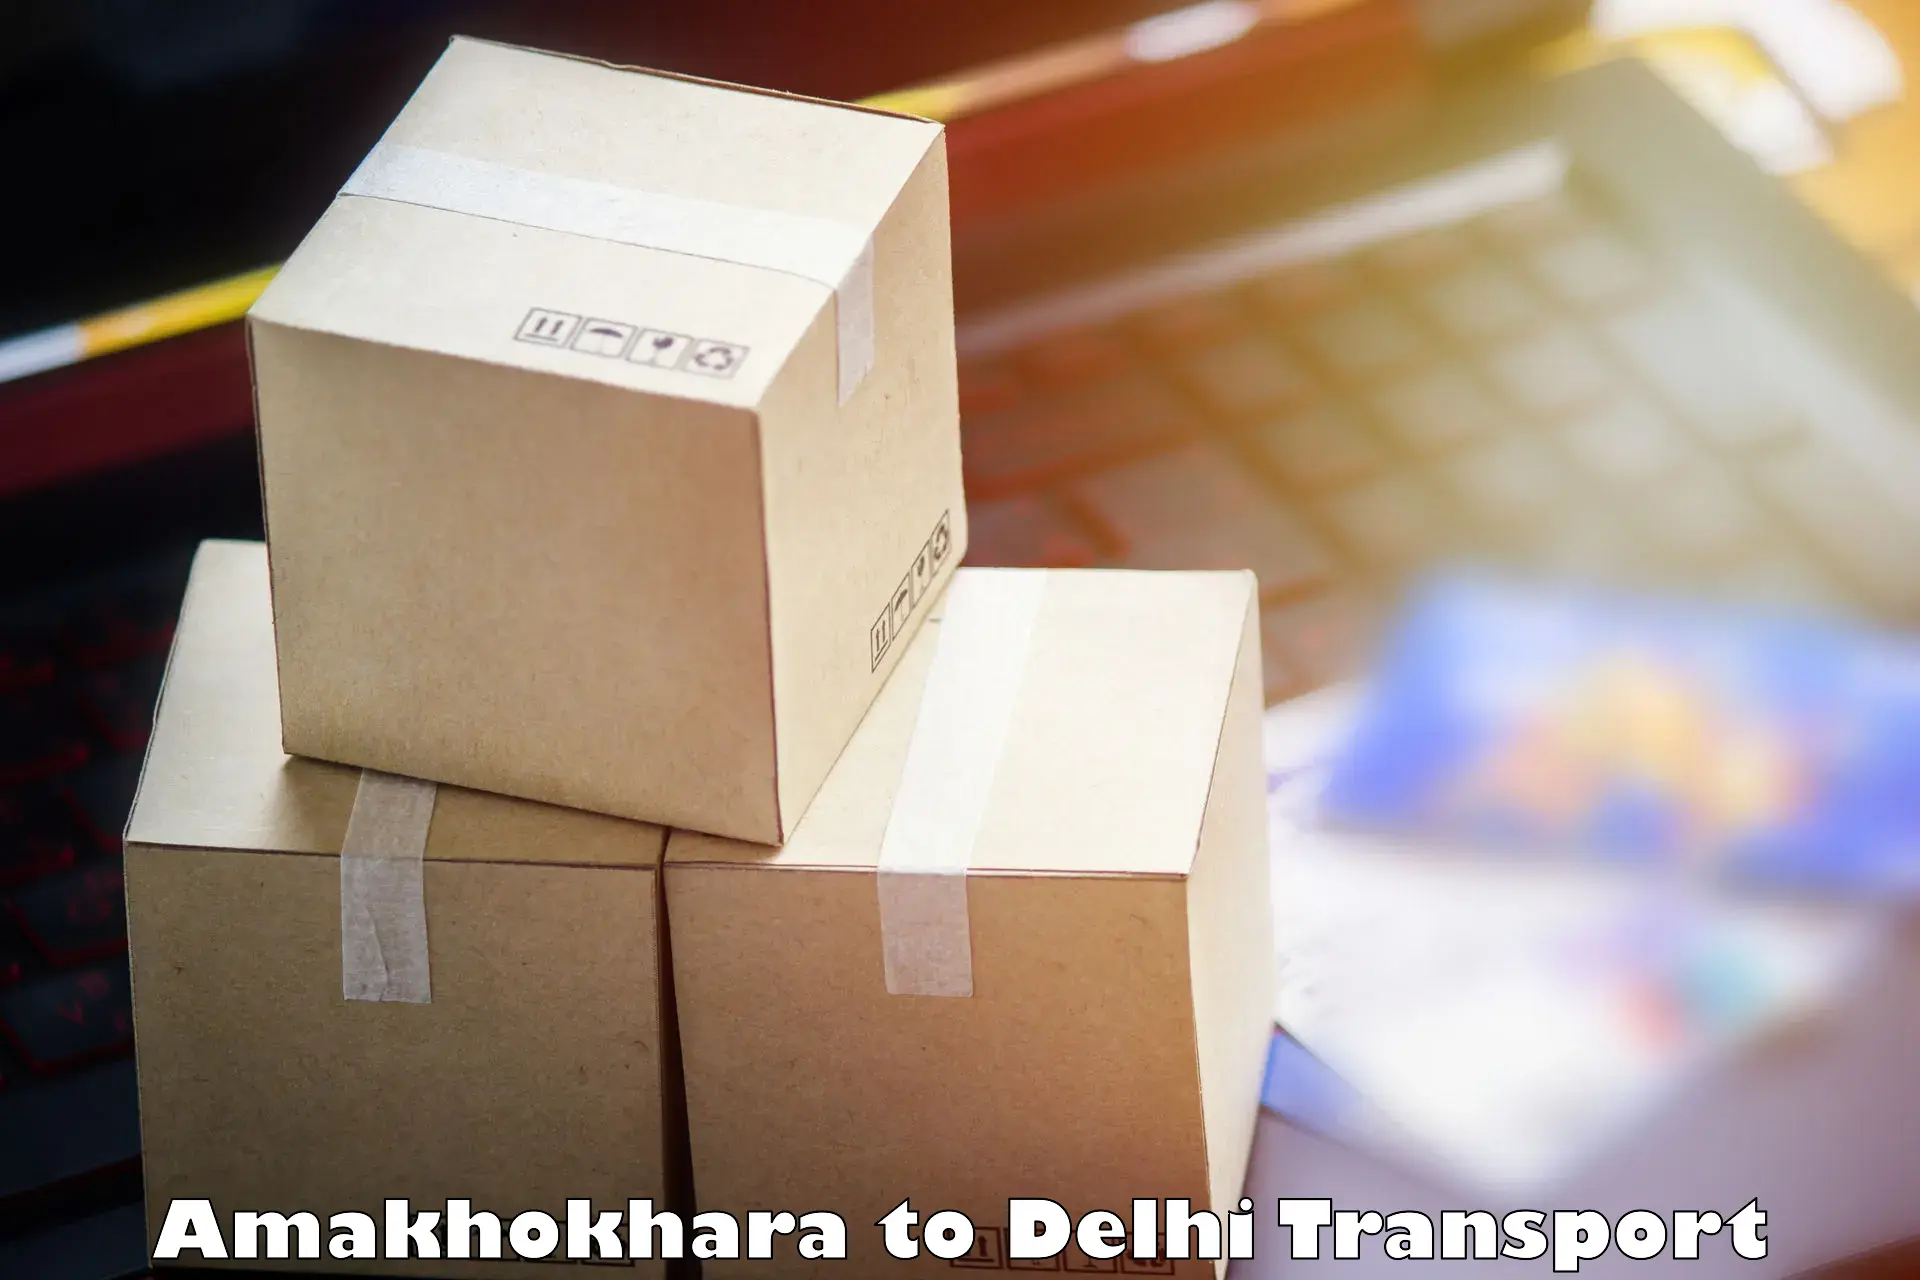 Daily transport service Amakhokhara to East Delhi